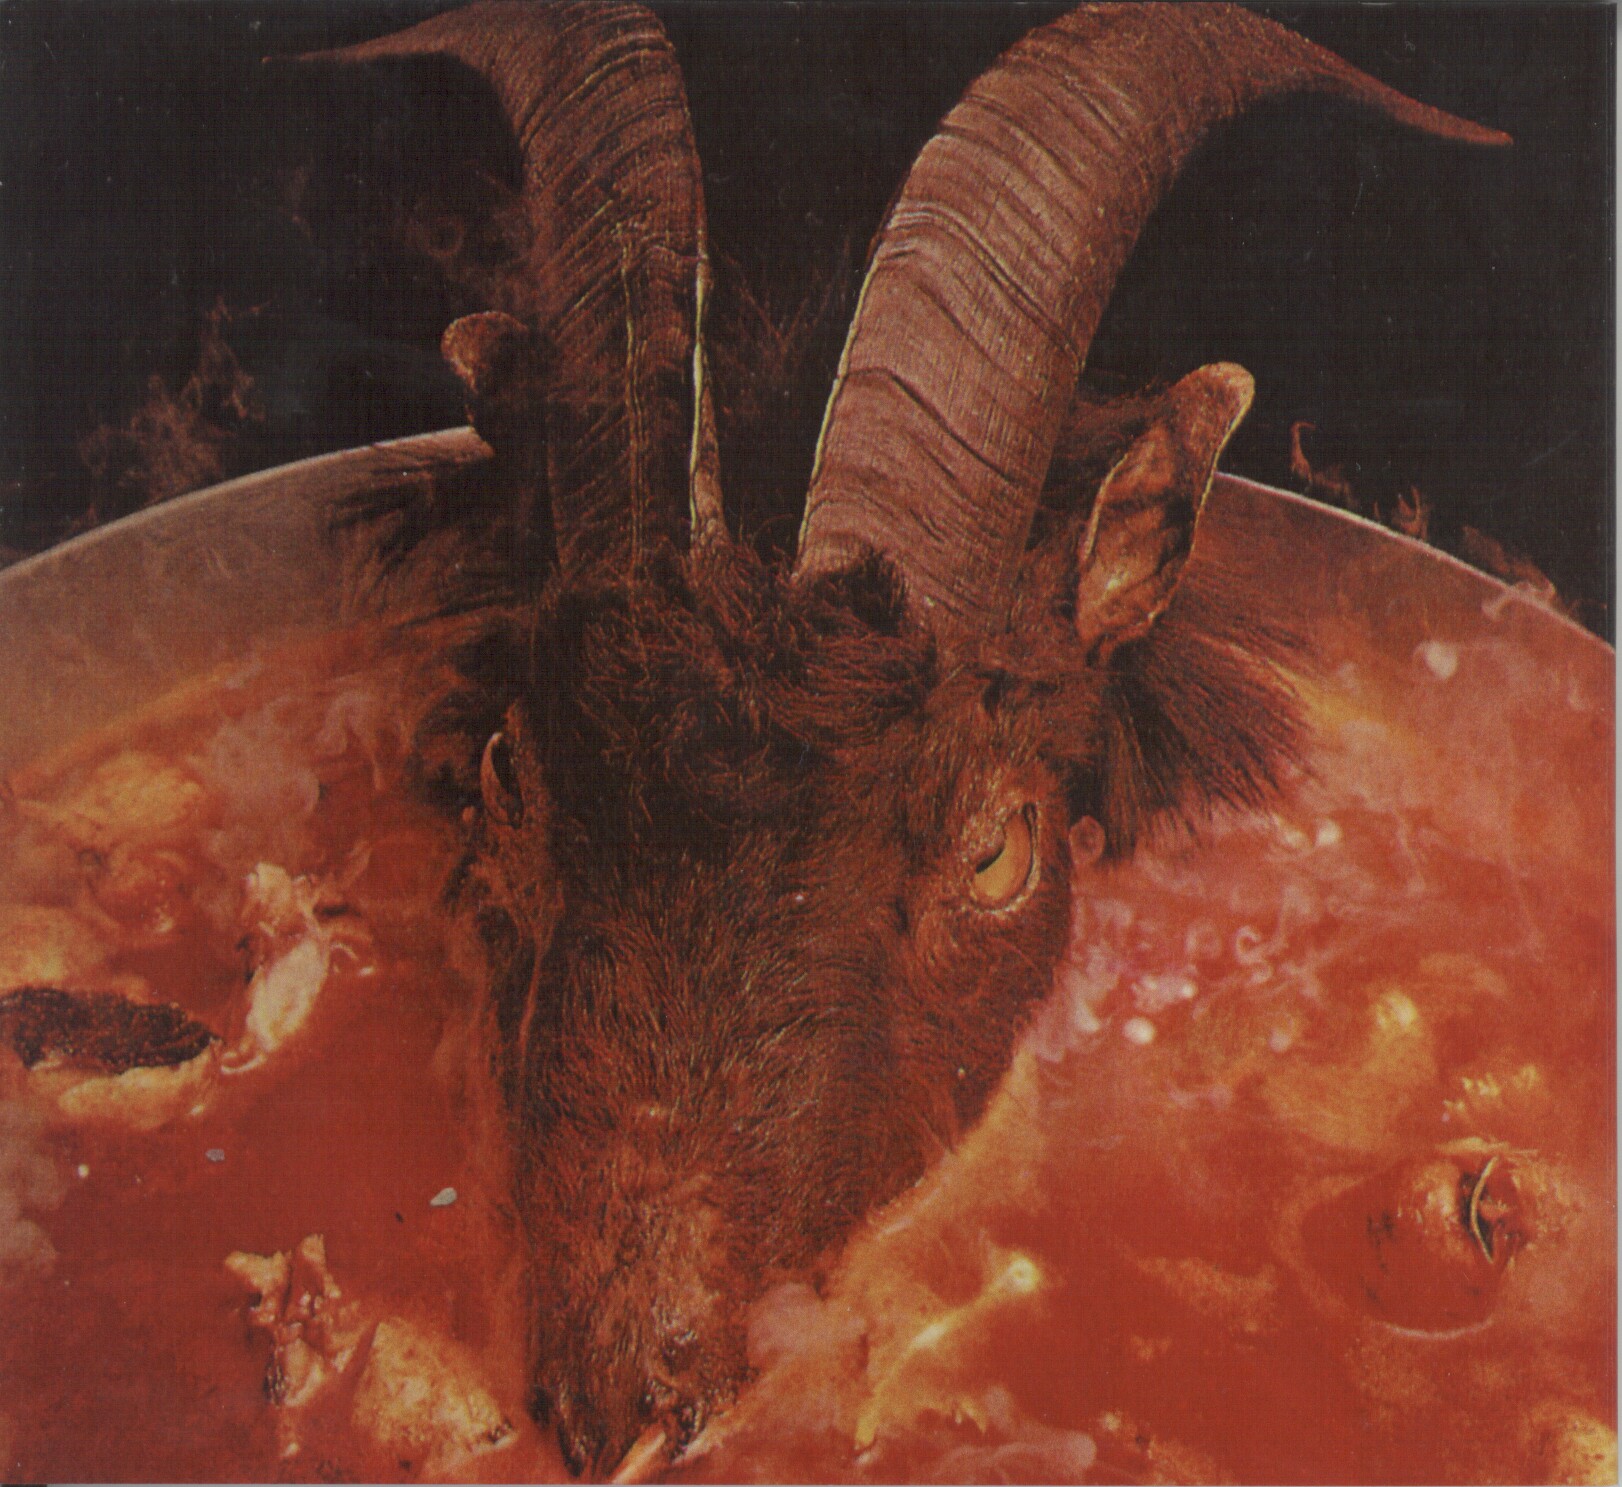 1972-1973-Goat's_head_soup_reheated-insert